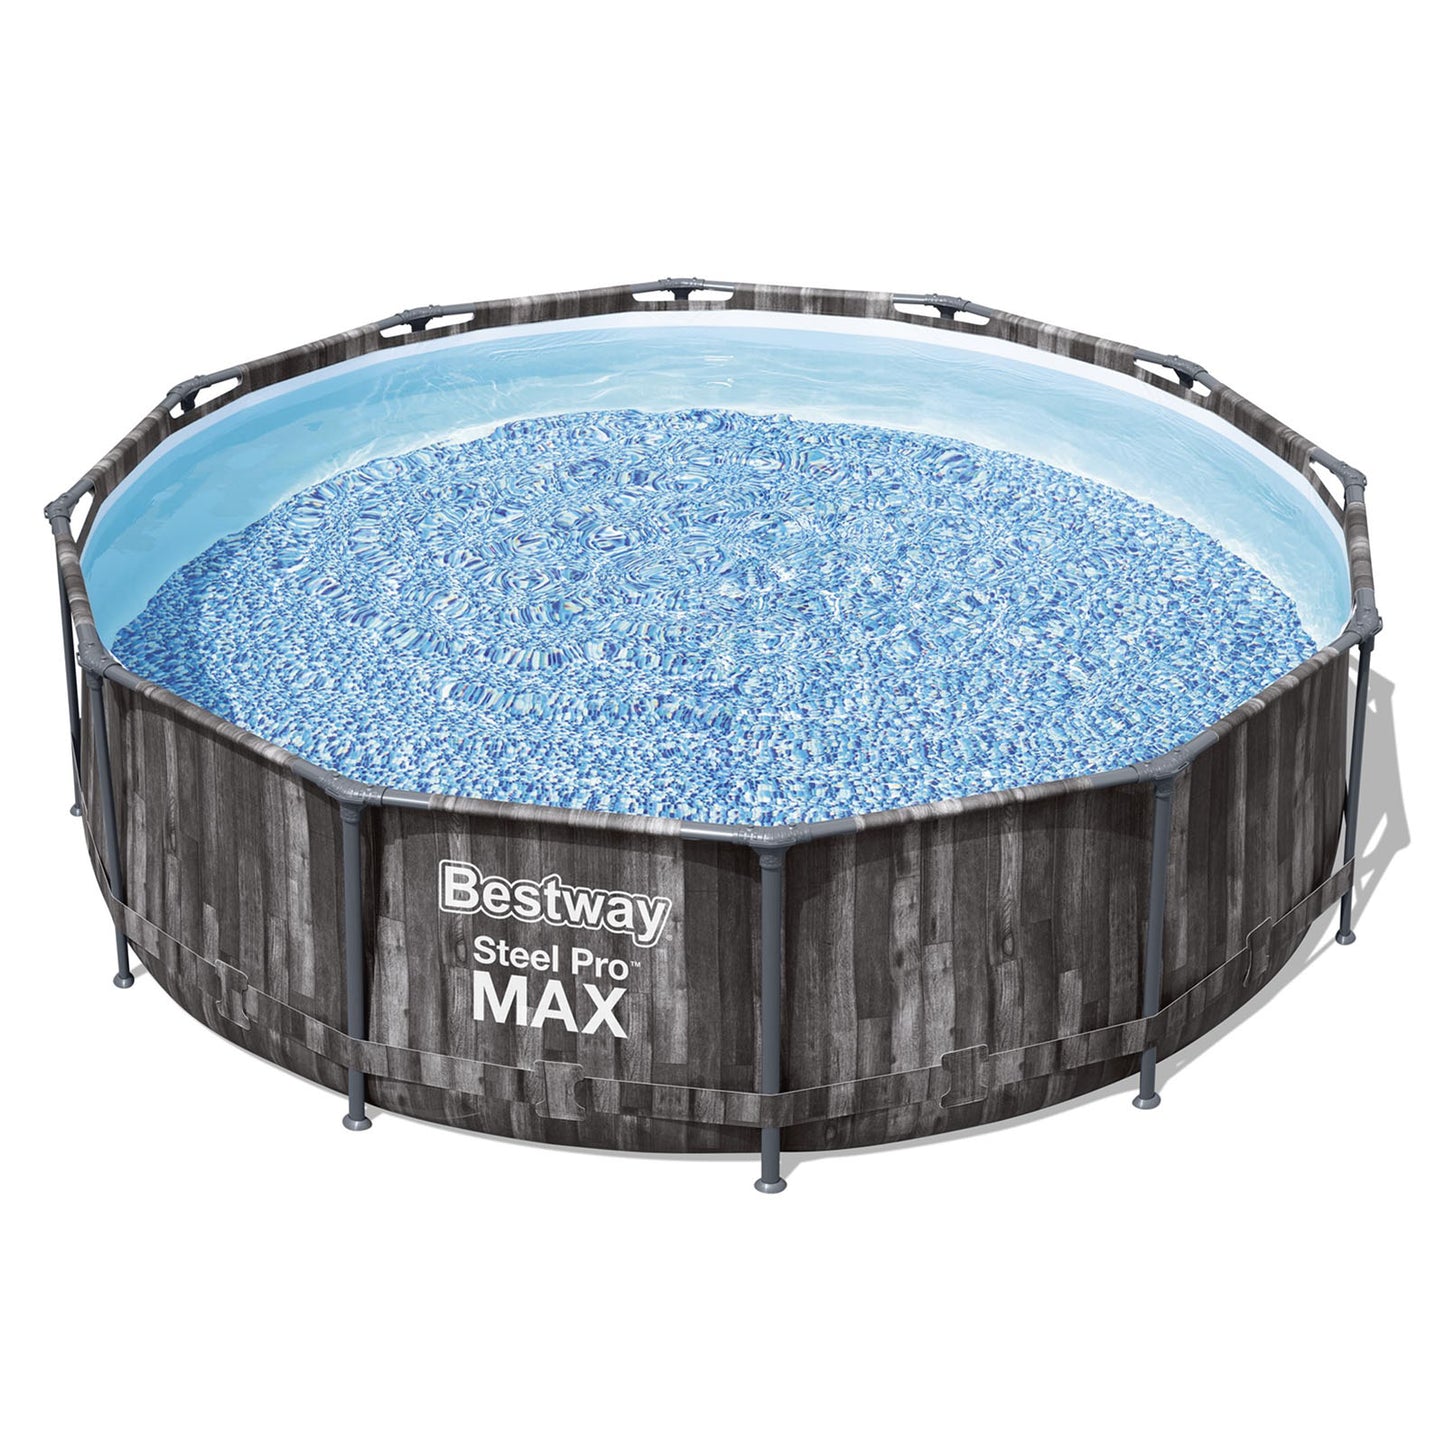 Bestway Steel Pro MAX™ Round Above Ground Swimming Pool Kit - 3.66m x 1.00m